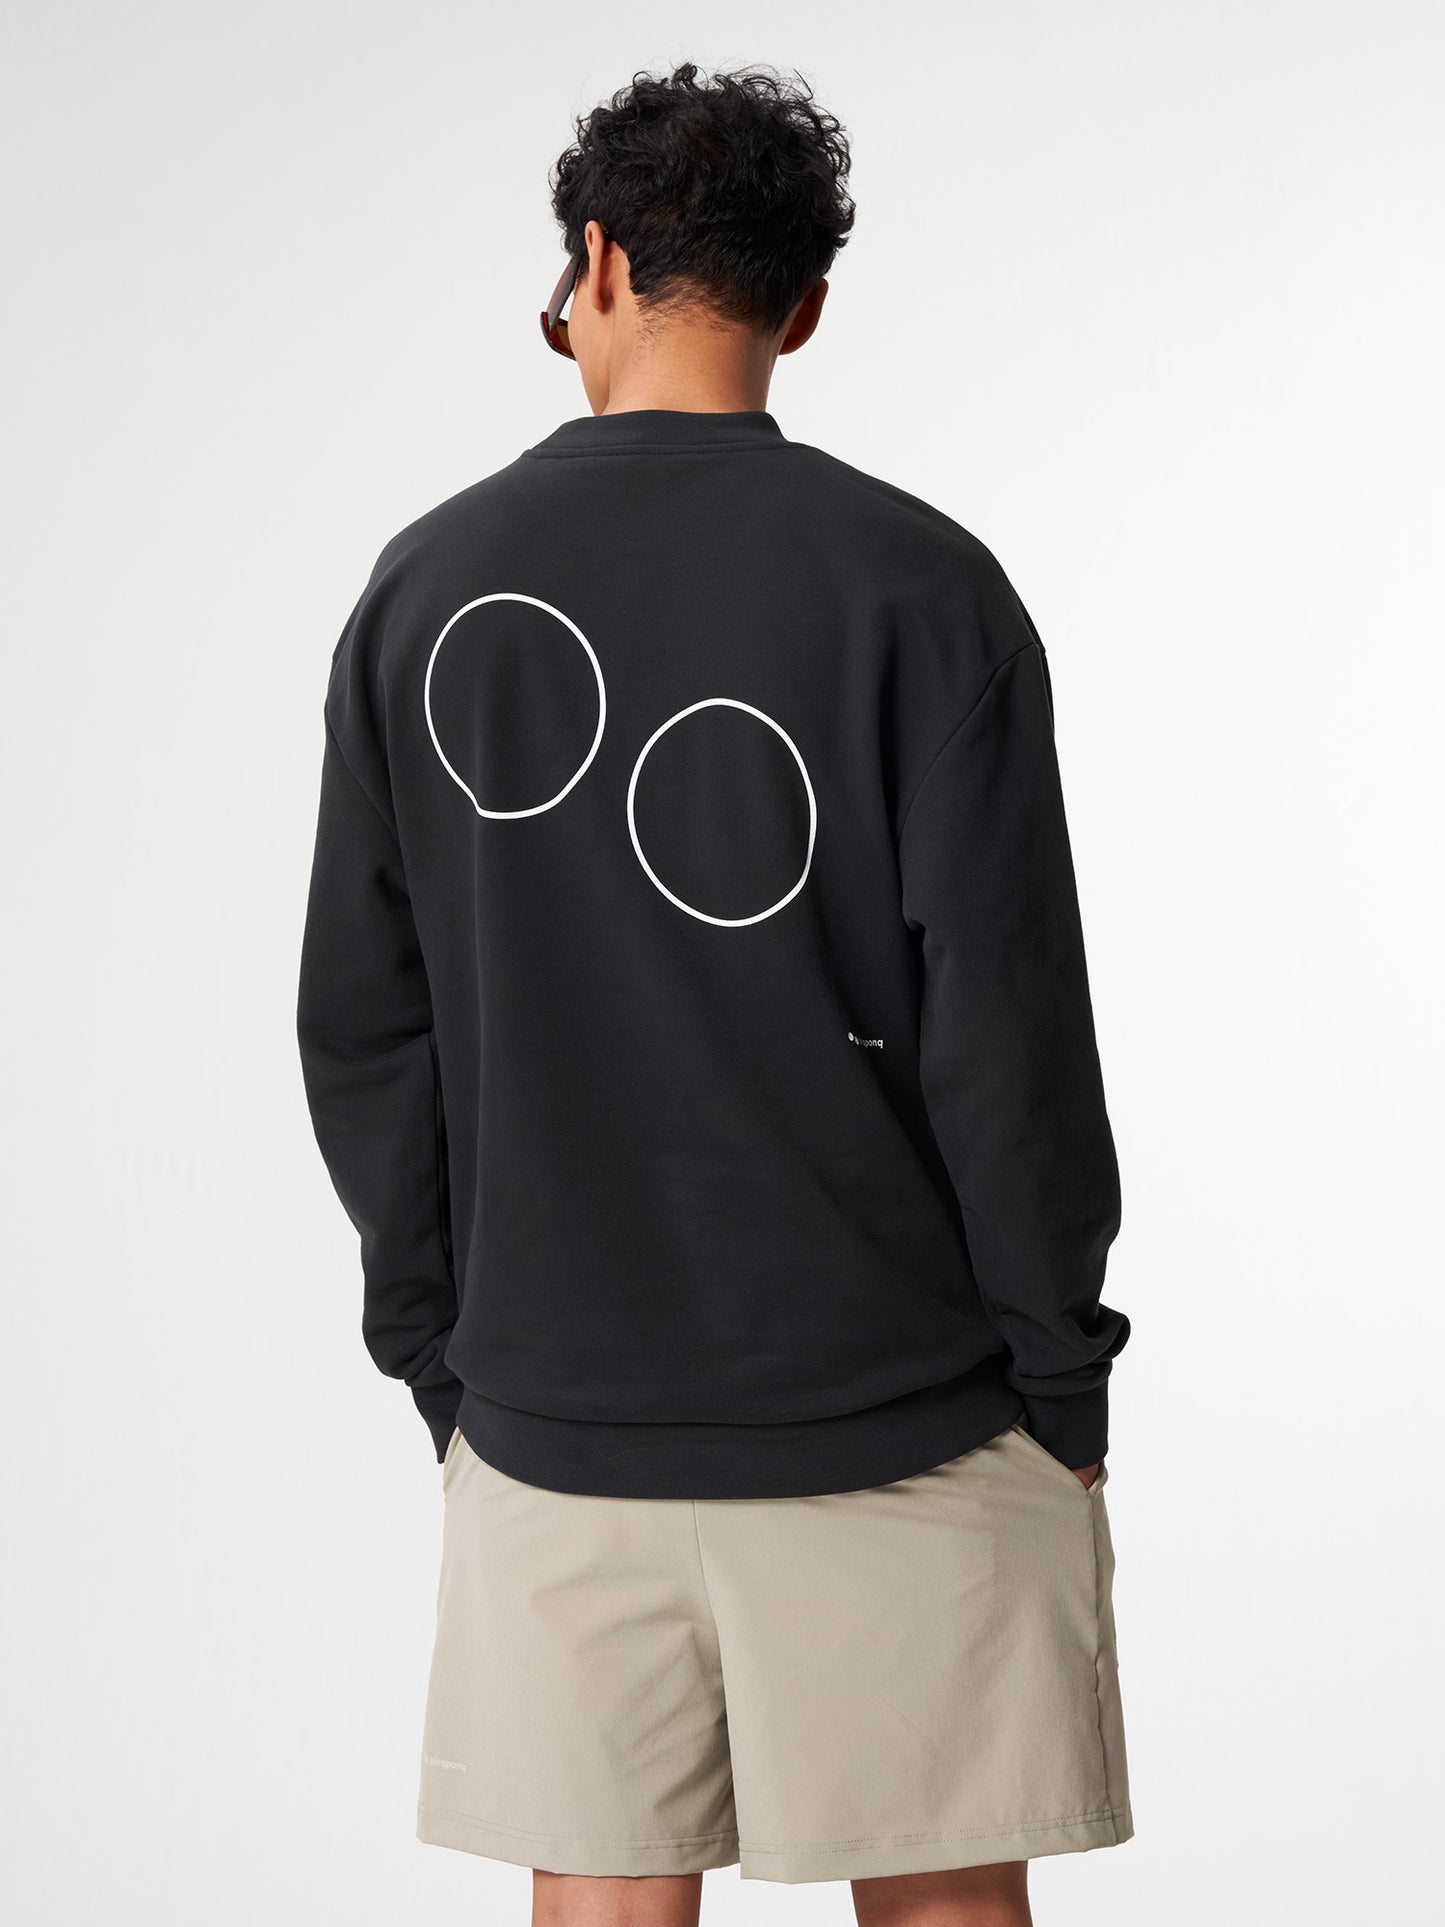 pinqponq-Sweatshirt-Unisex-Circles-Peat-Black-model-back